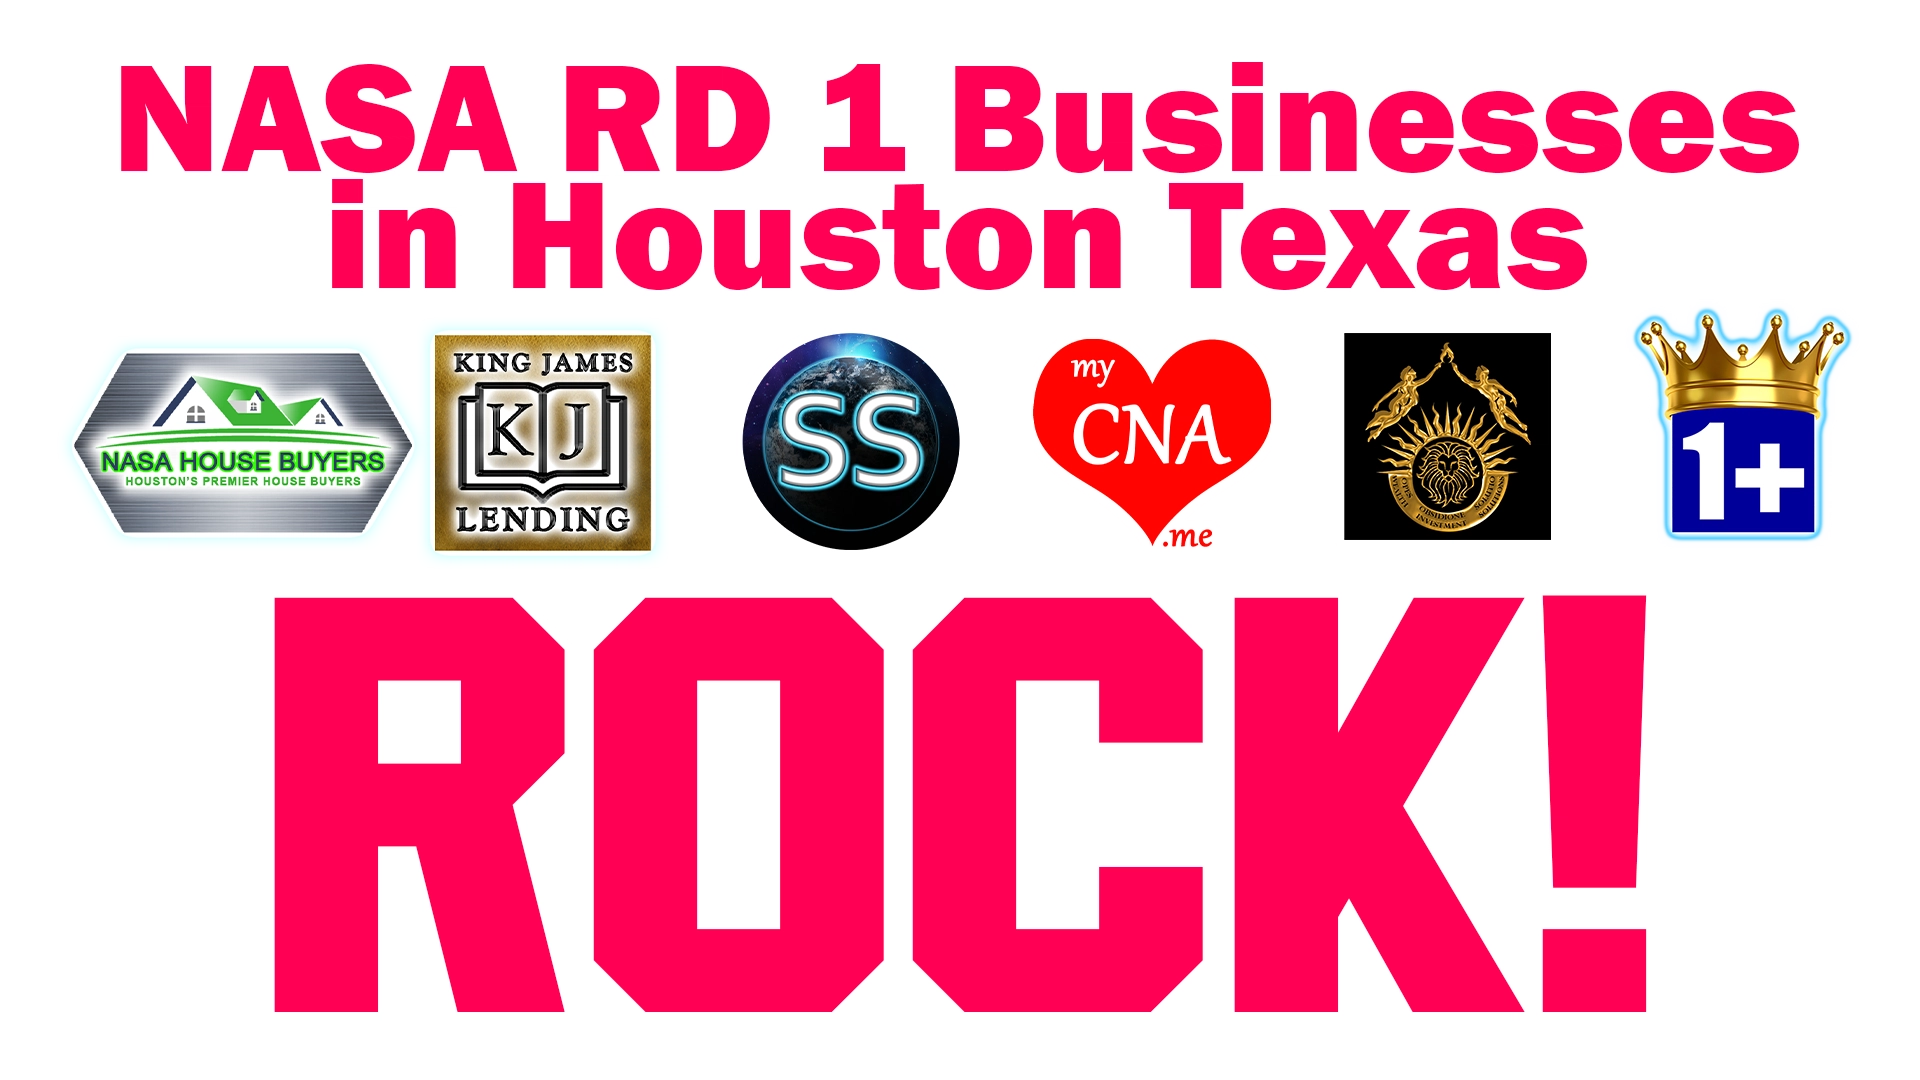 NASA RD 1 Businesses in Houston Texas